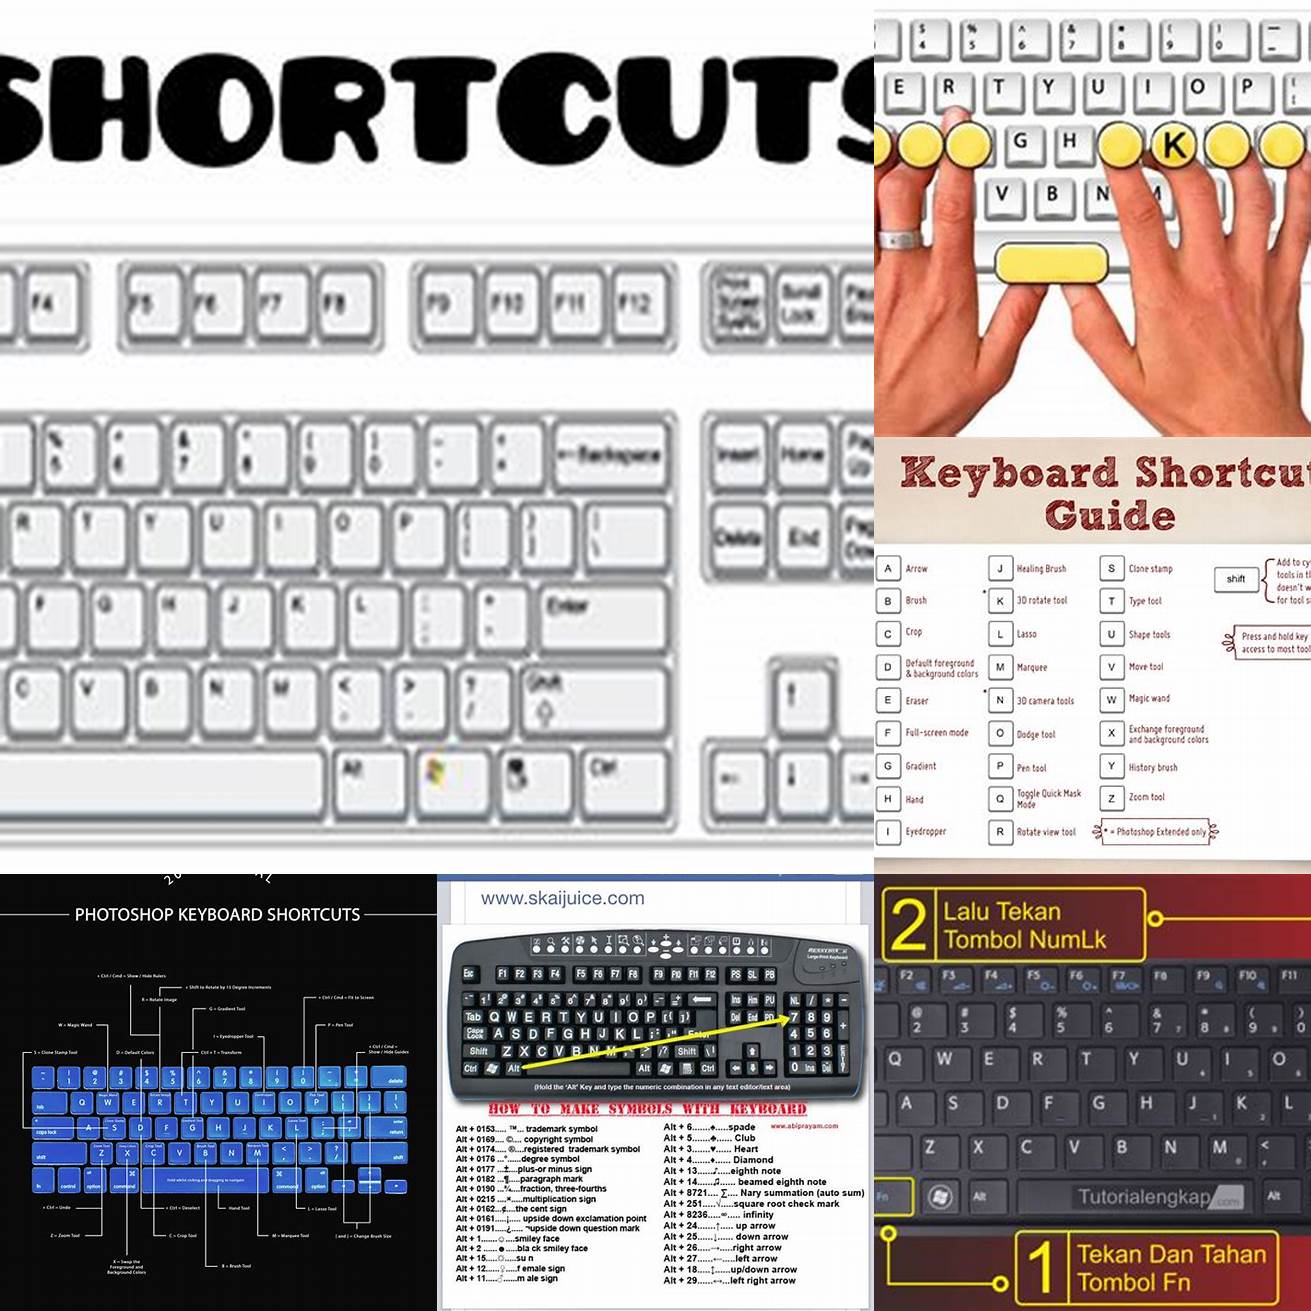 Ketiga atur shortcut keyboard